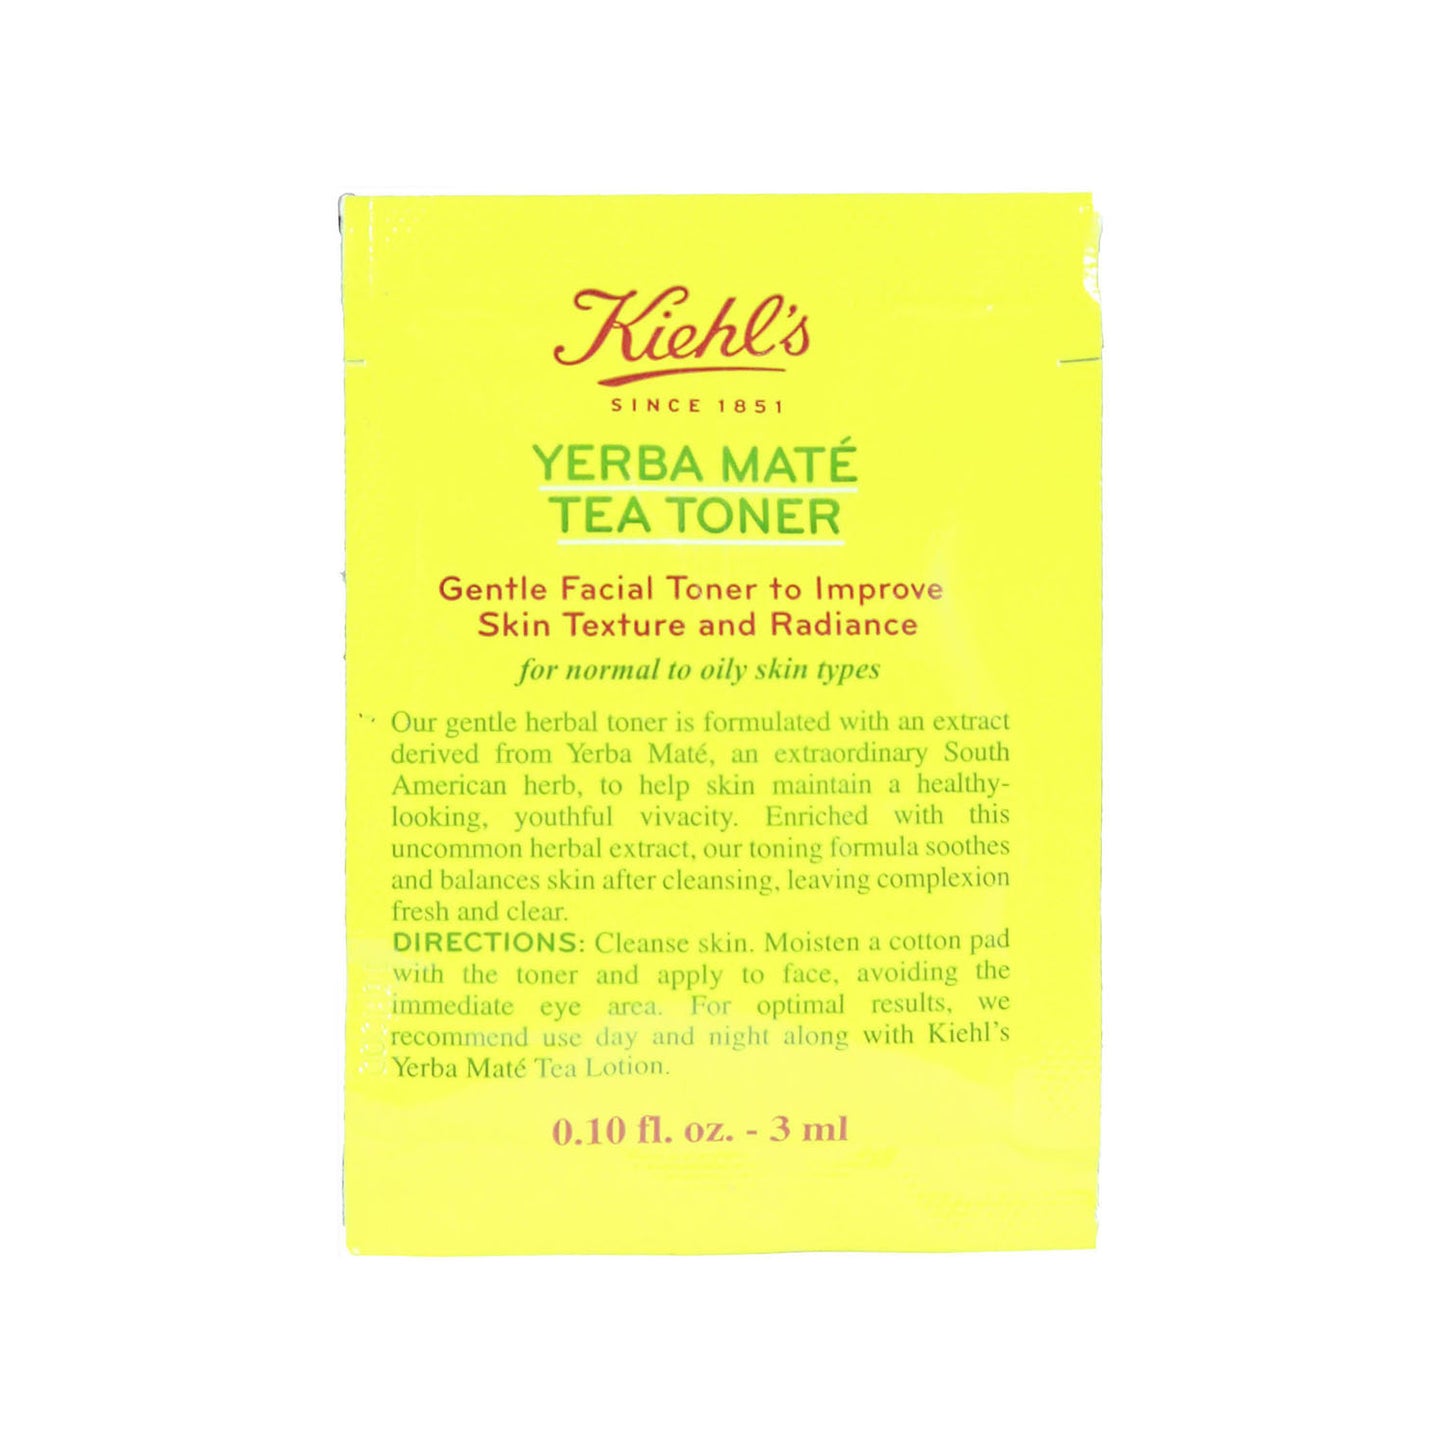 Yerba Mate Tea Cleanser